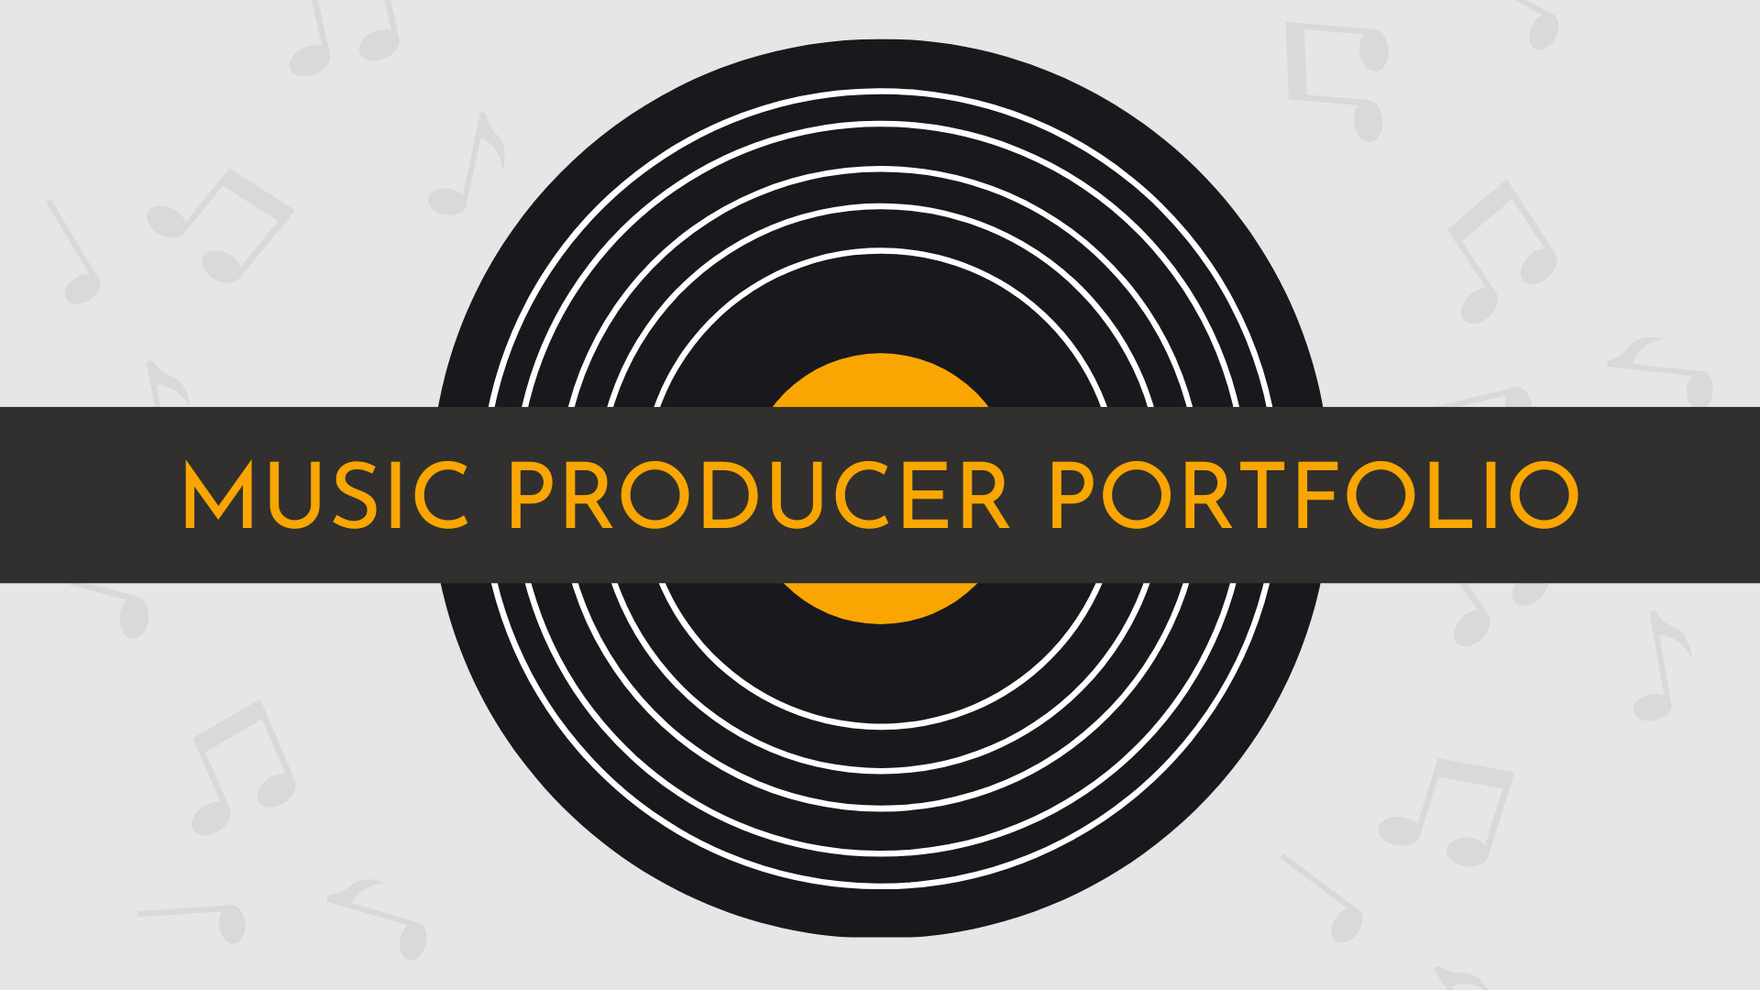 Music Producer Portfolio Presentation